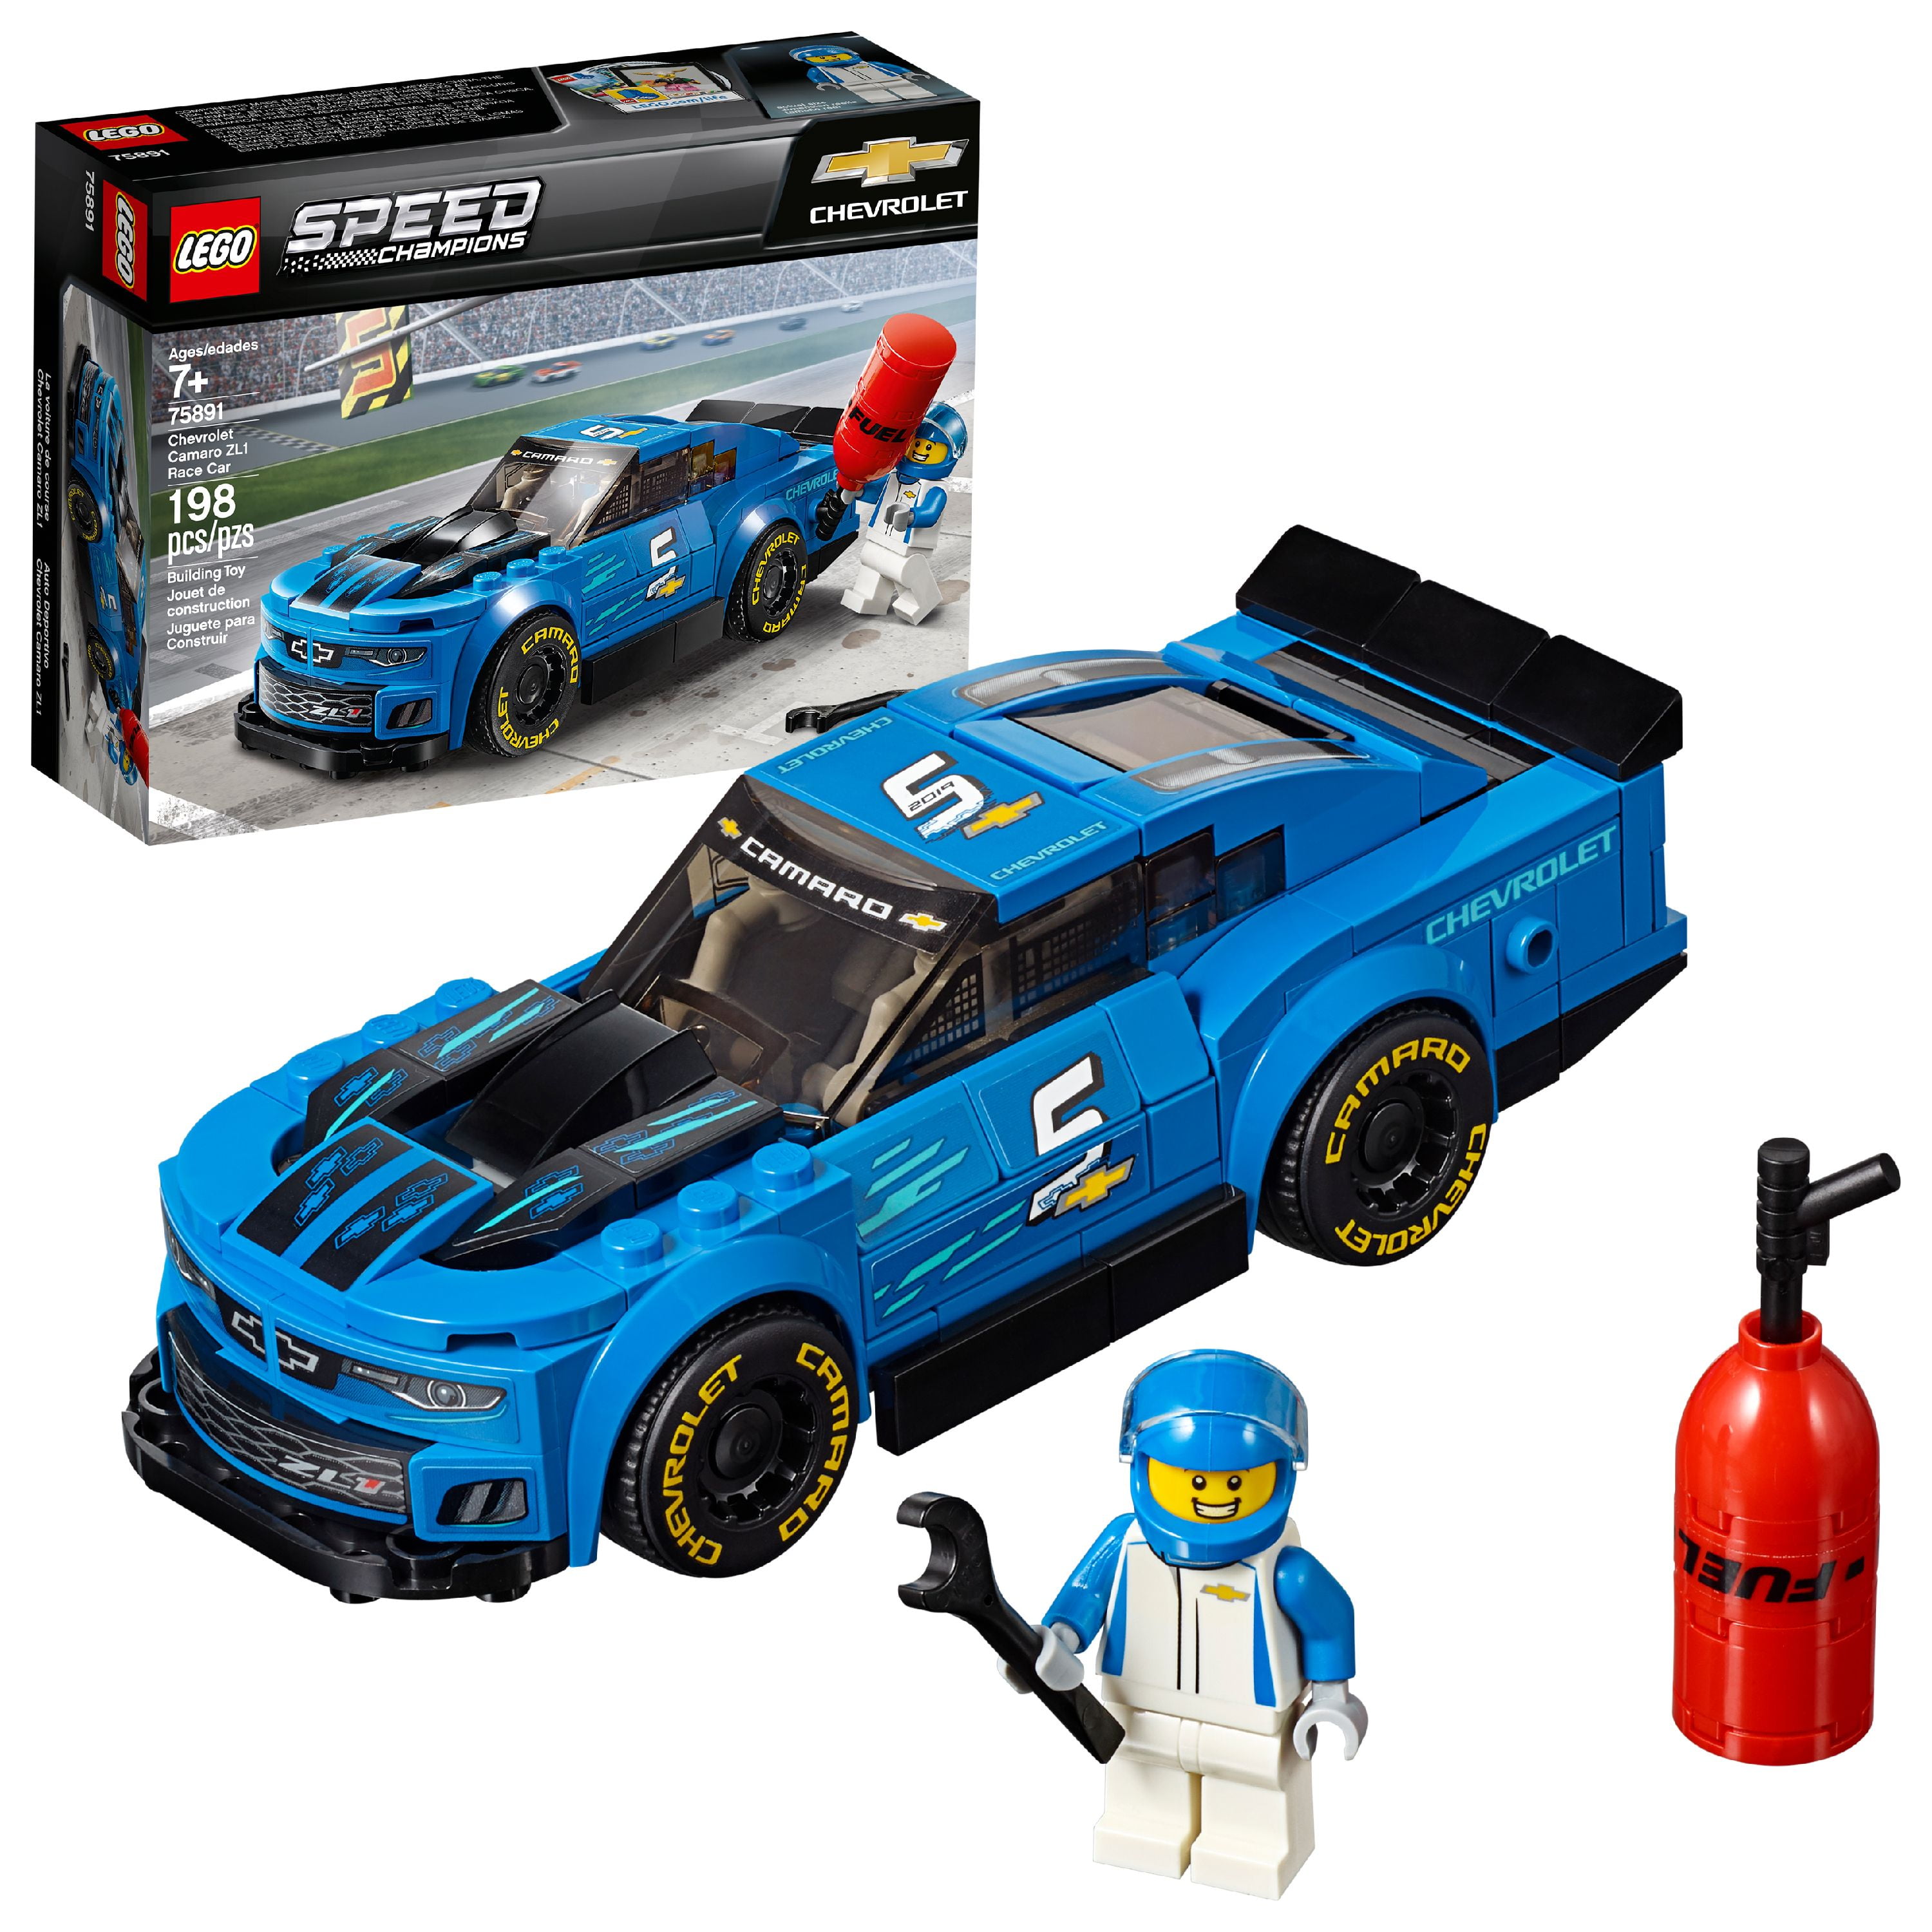 LEGO Speed Champions Chevrolet Camaro Race Car 75891 - Walmart.com